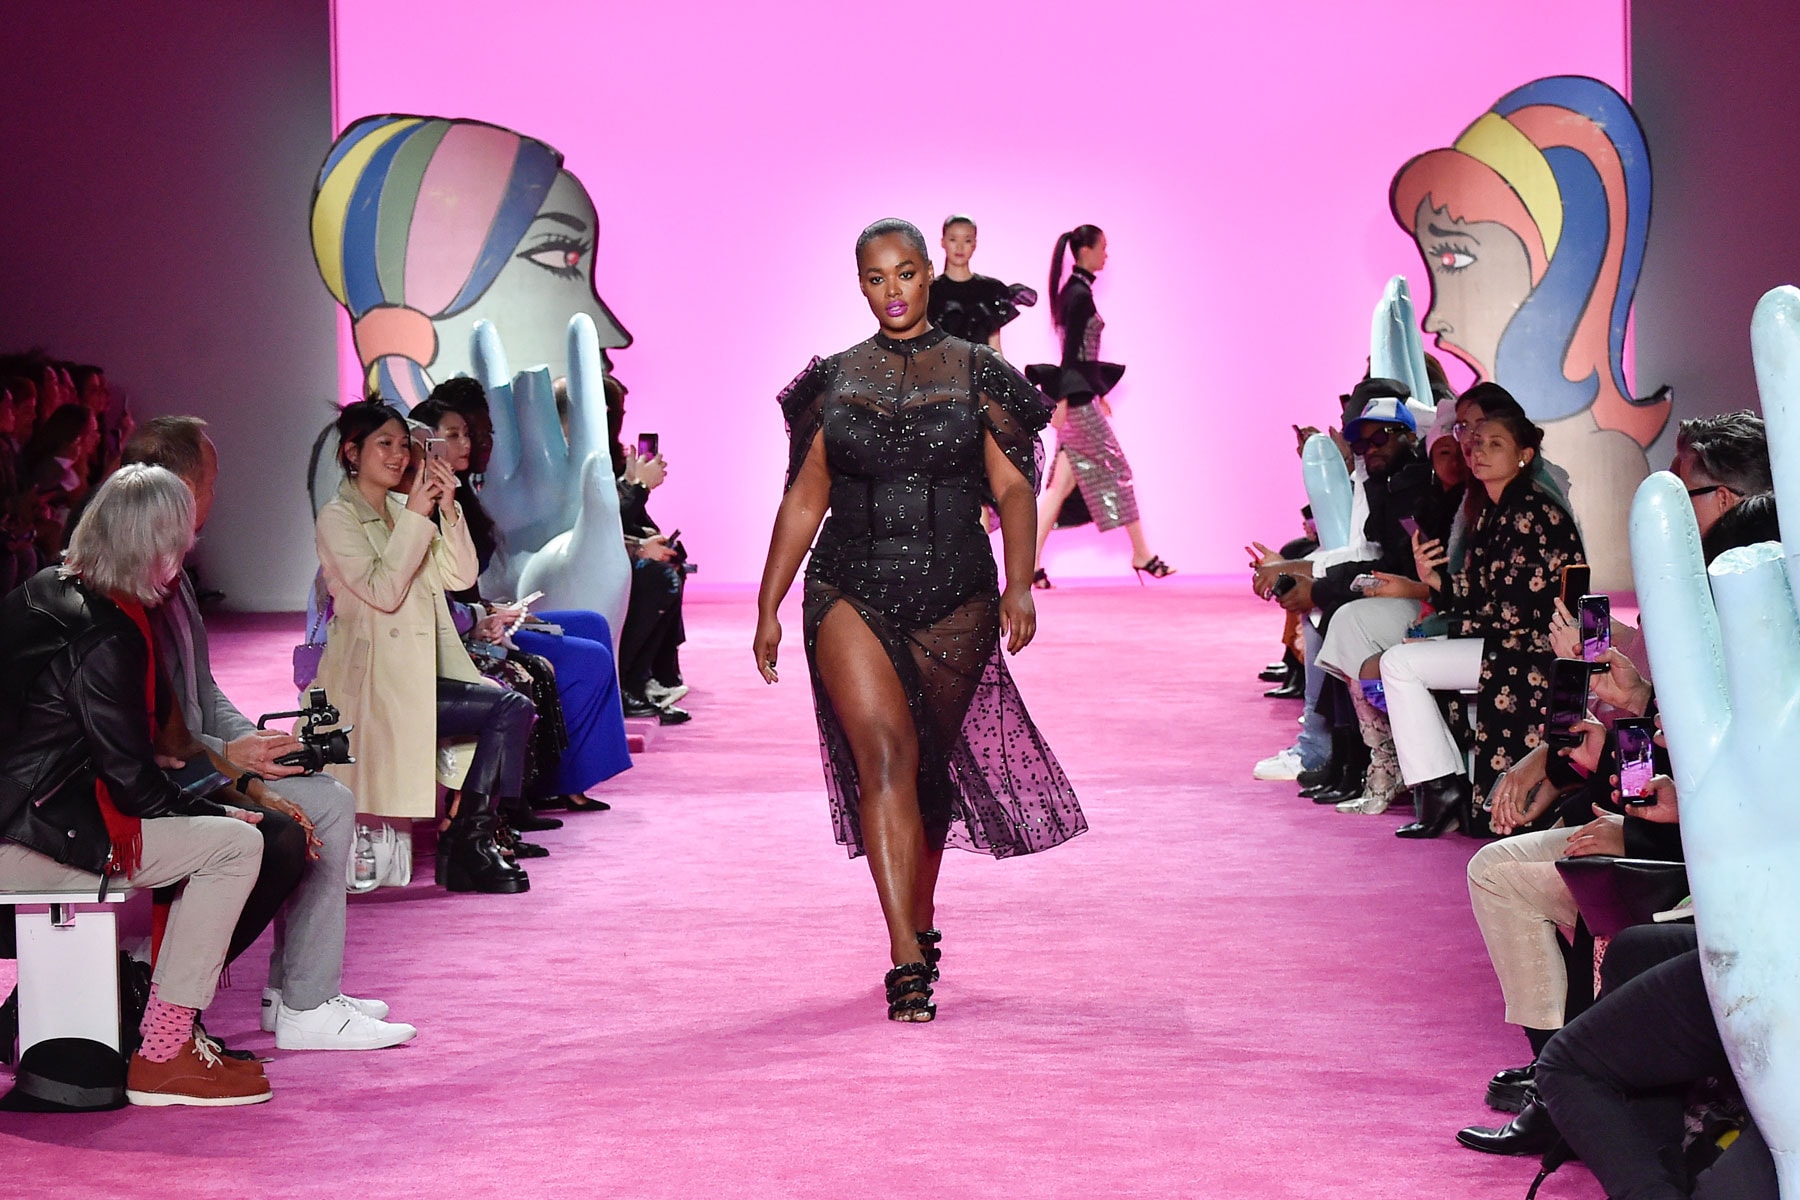 plus size model runway show fashion black women body positivity representation diversity